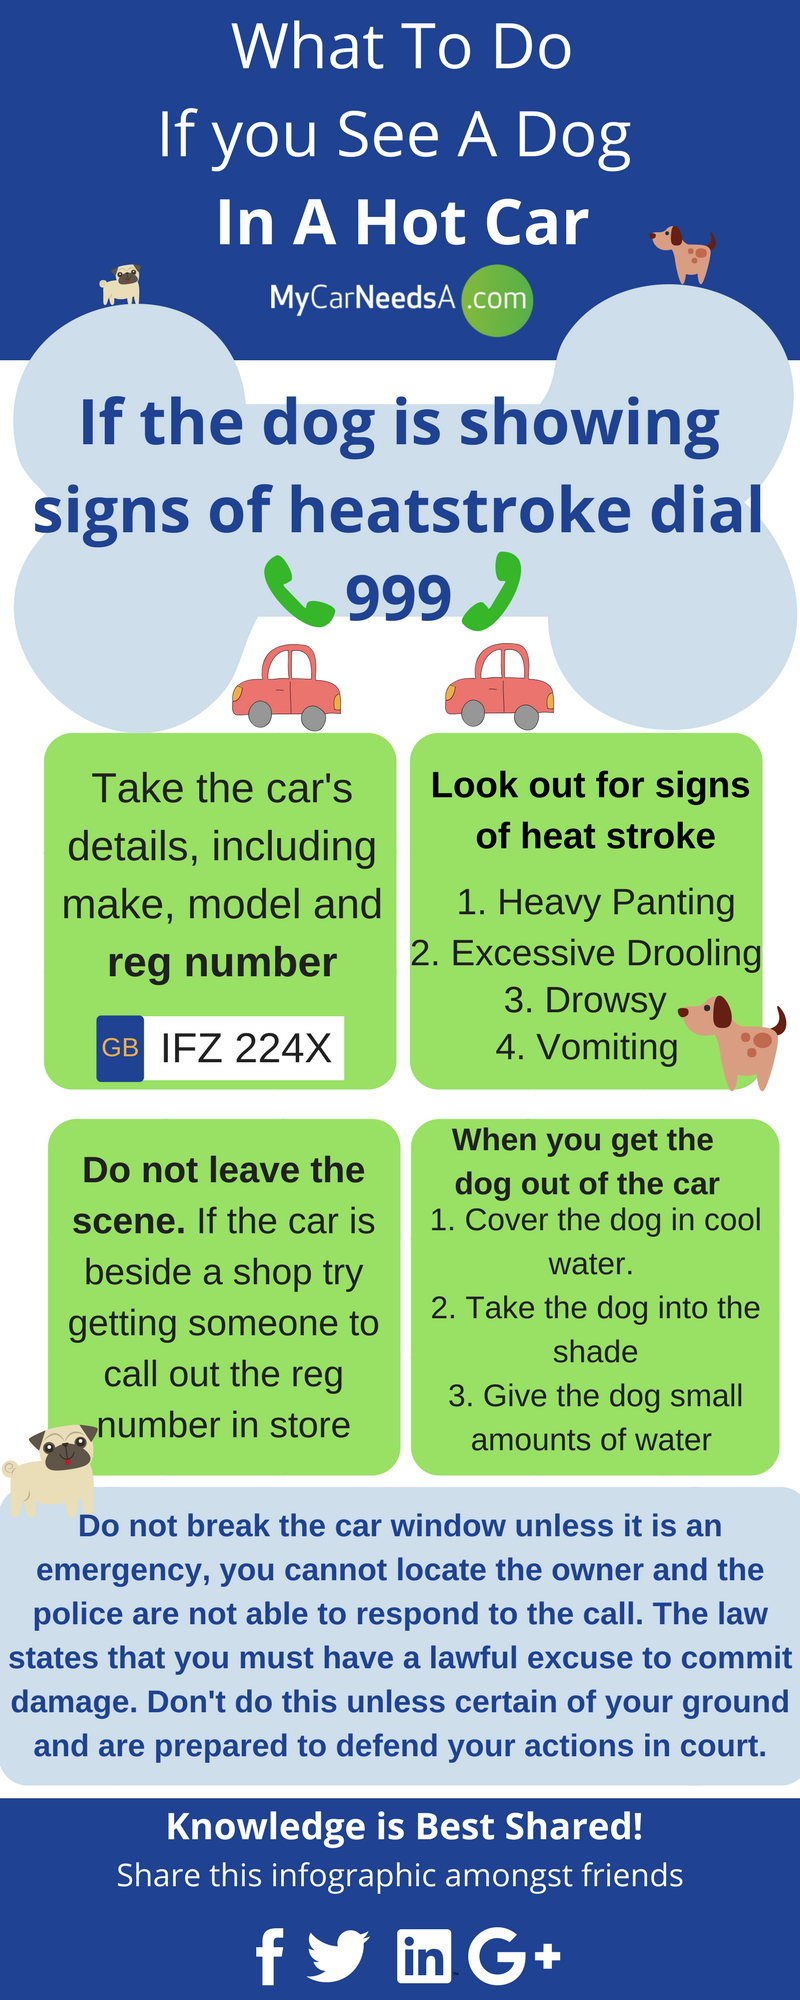 Dogs in hot cars is dangerous